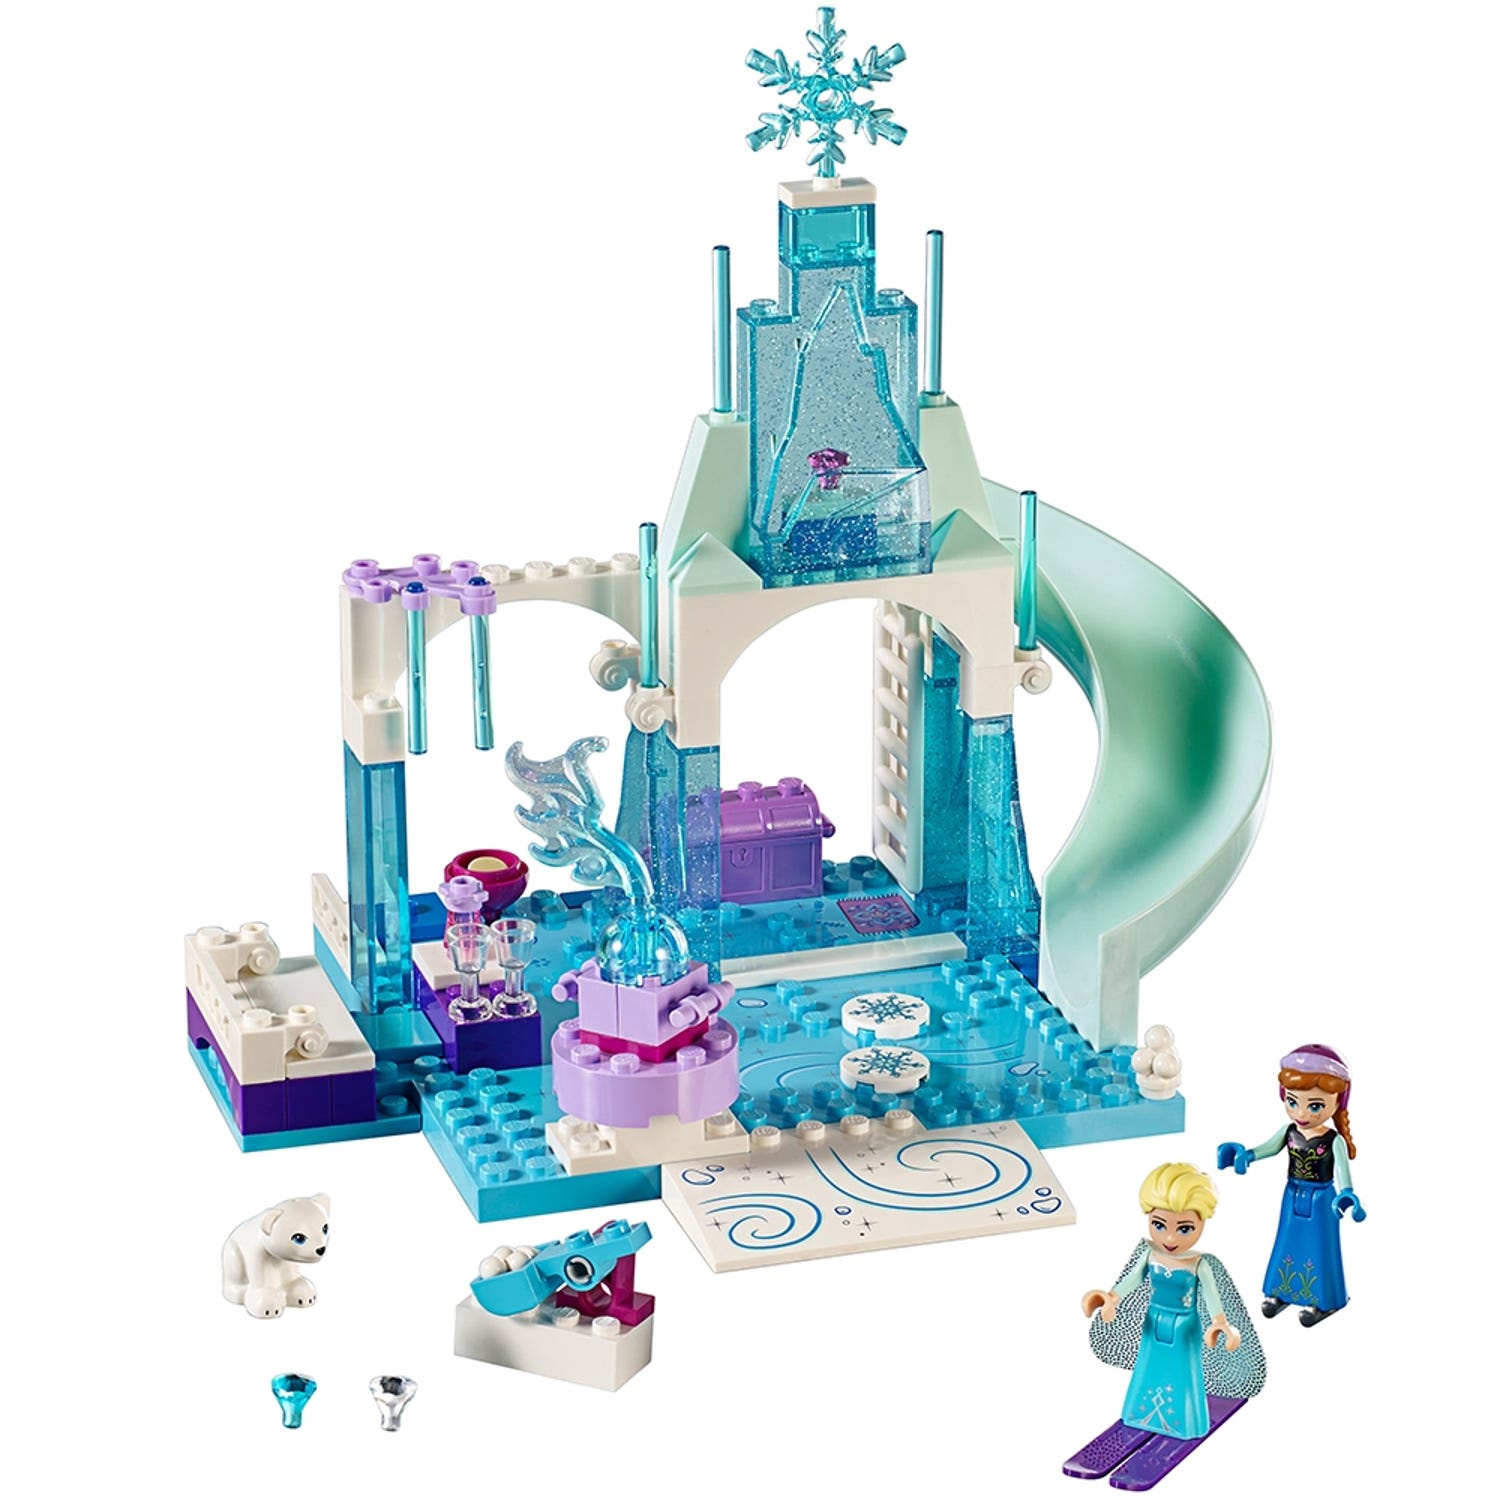 Lego 10736 - Juniors : L'aire de jeu d'Anna et Elsa - Comparer